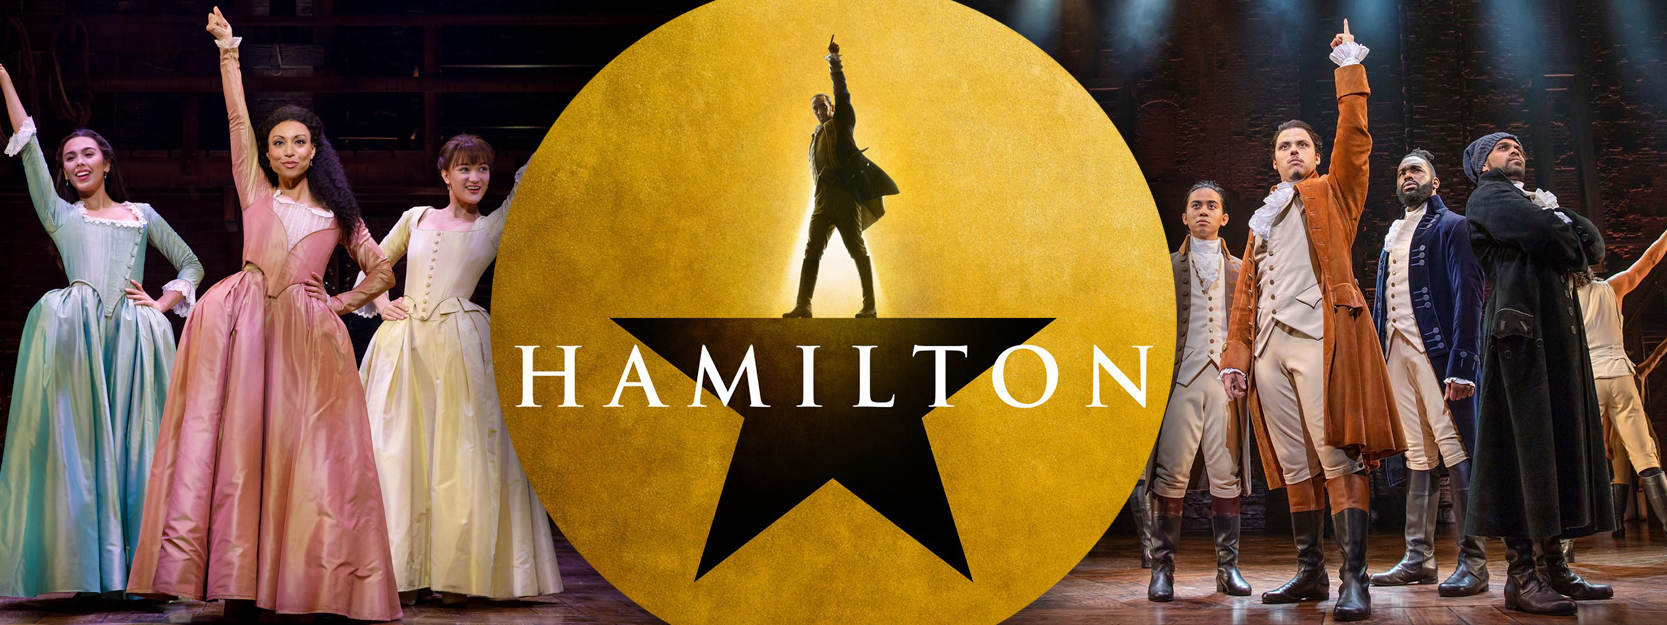 Hamilton the Musical Banner